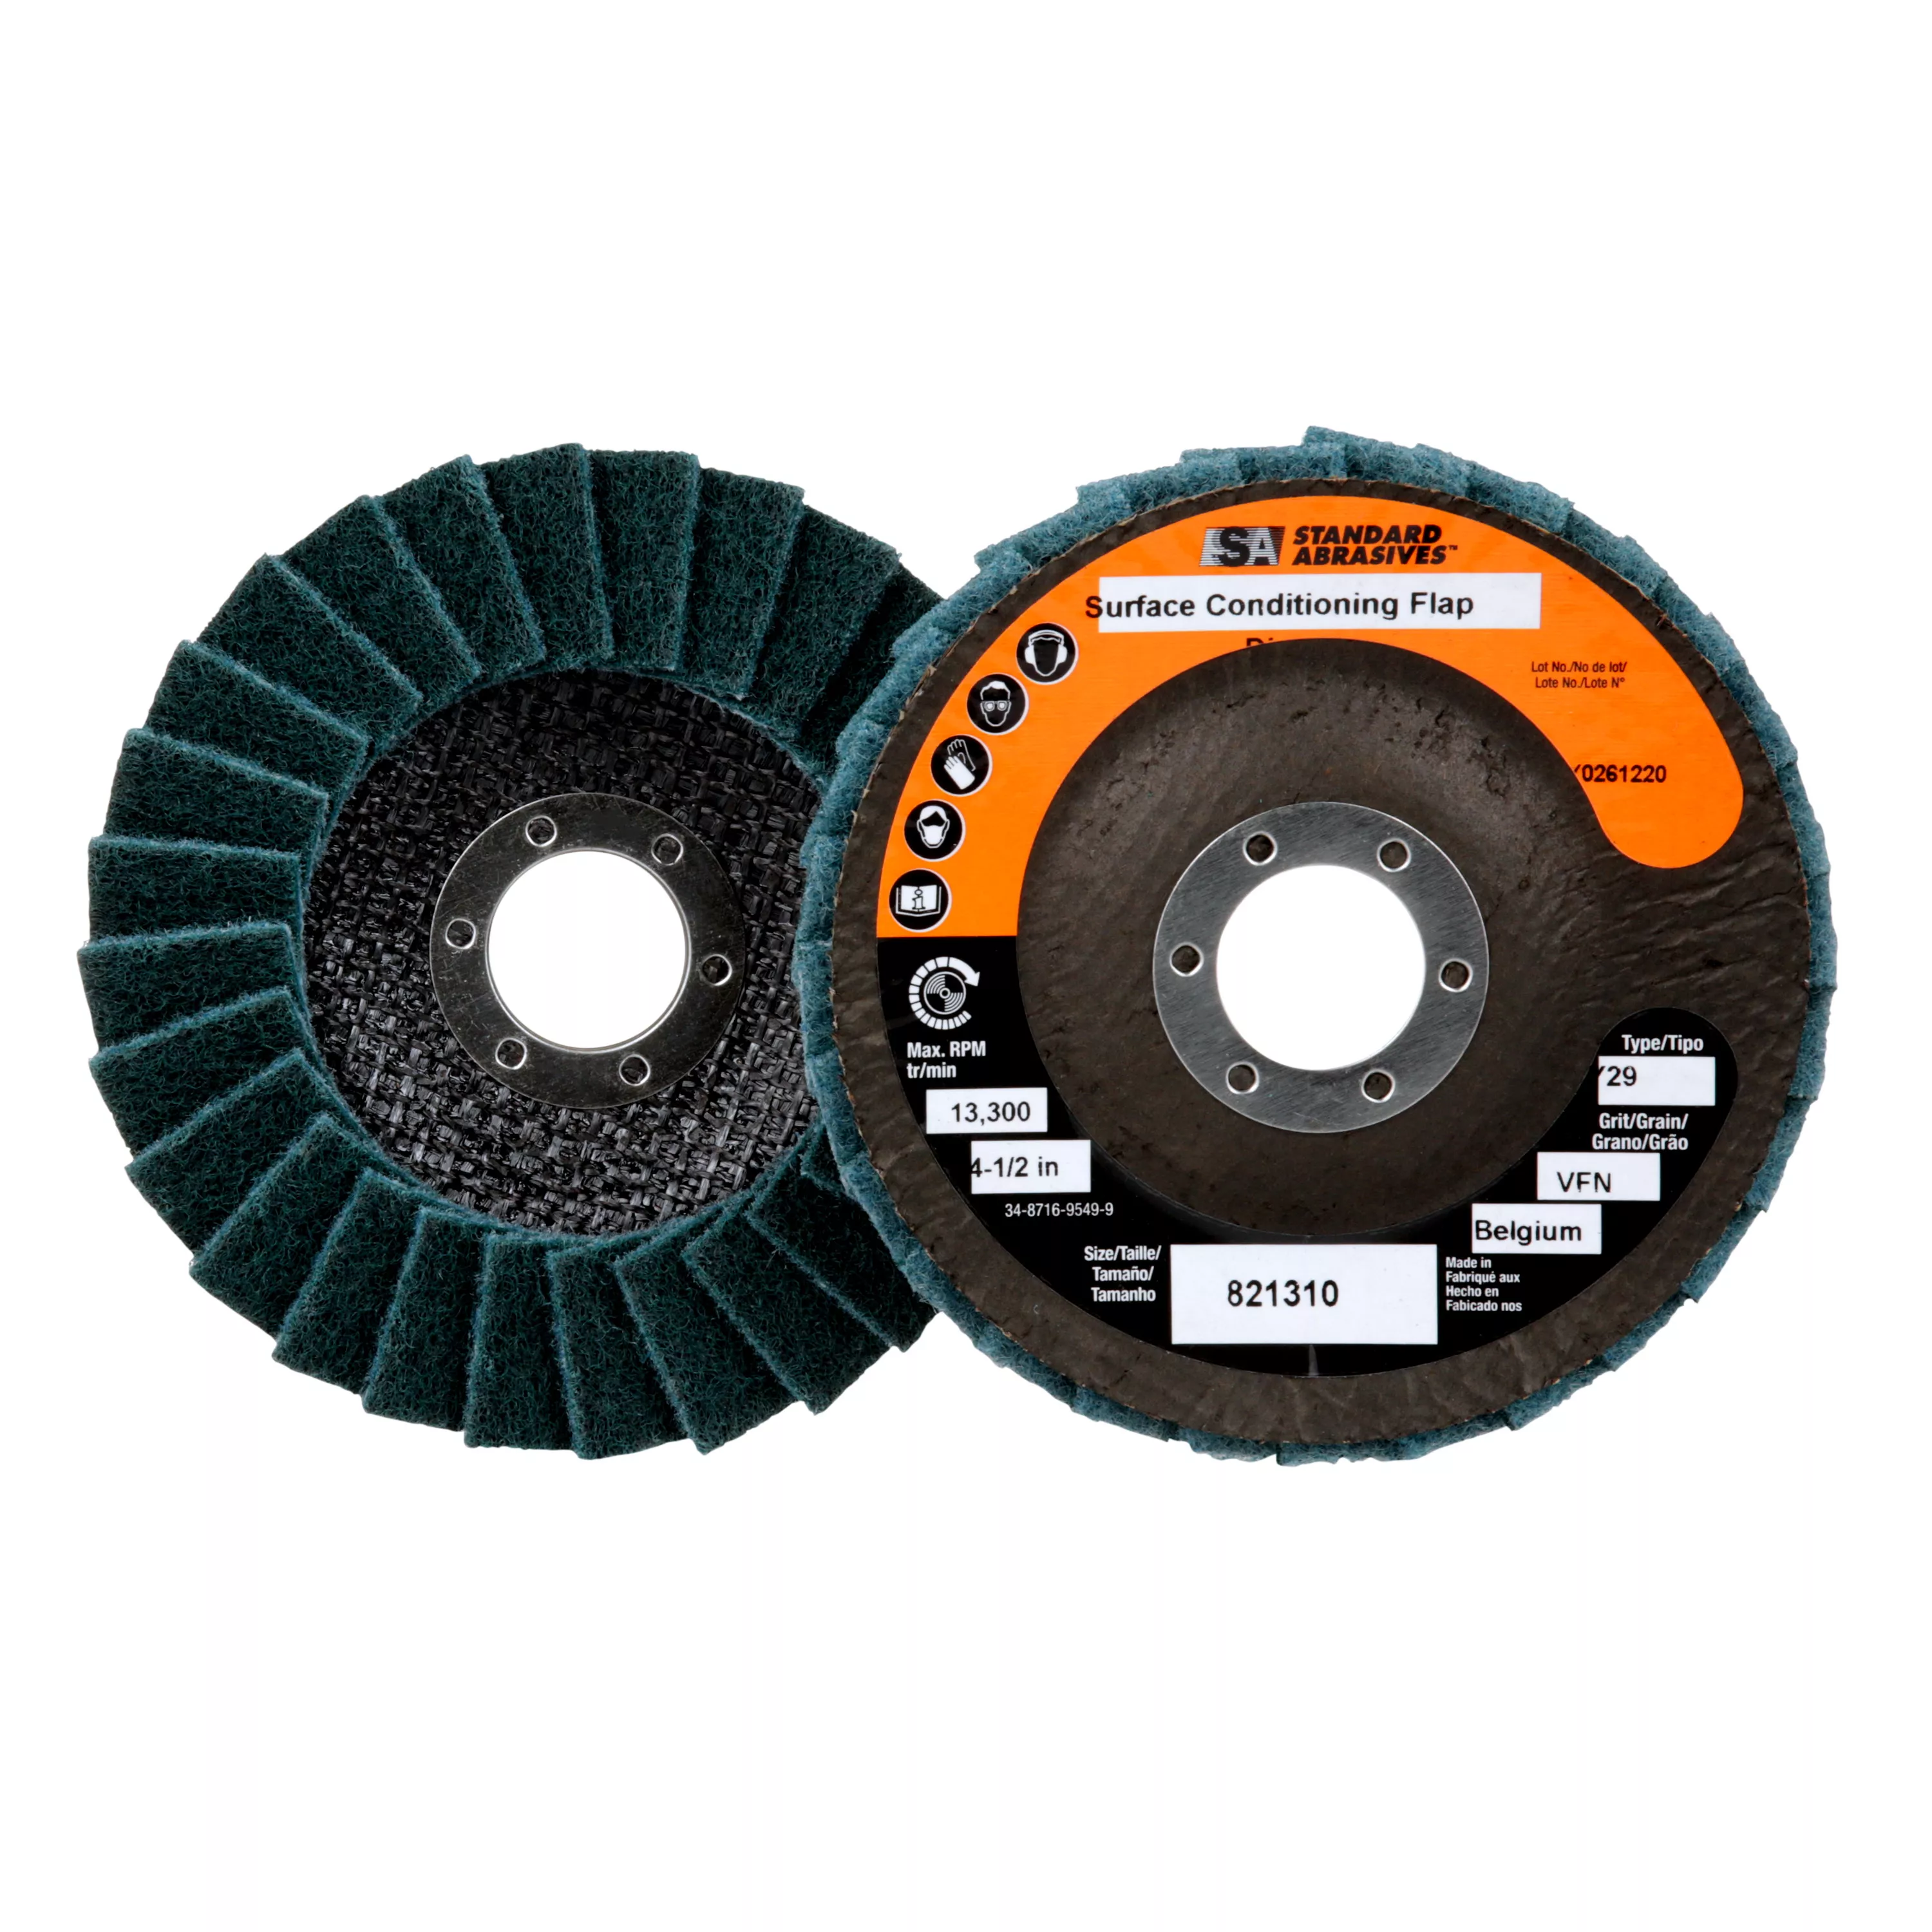 SKU 7000121835 | Standard Abrasives™ Surface Conditioning Flap Disc